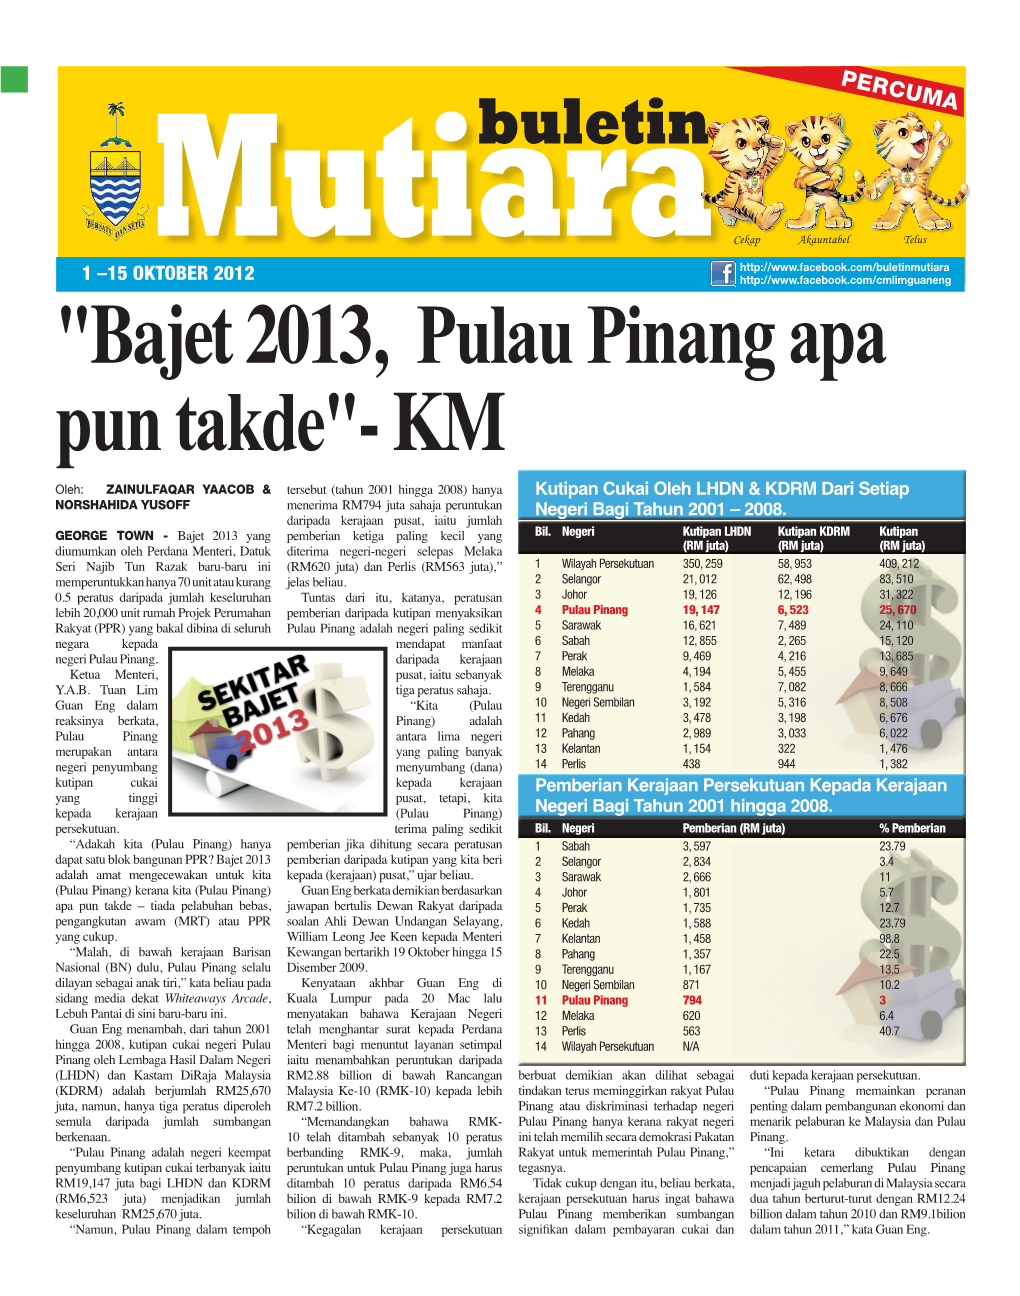 "Bajet 2013, Pulau Pinang Apa Pun Takde"- KM